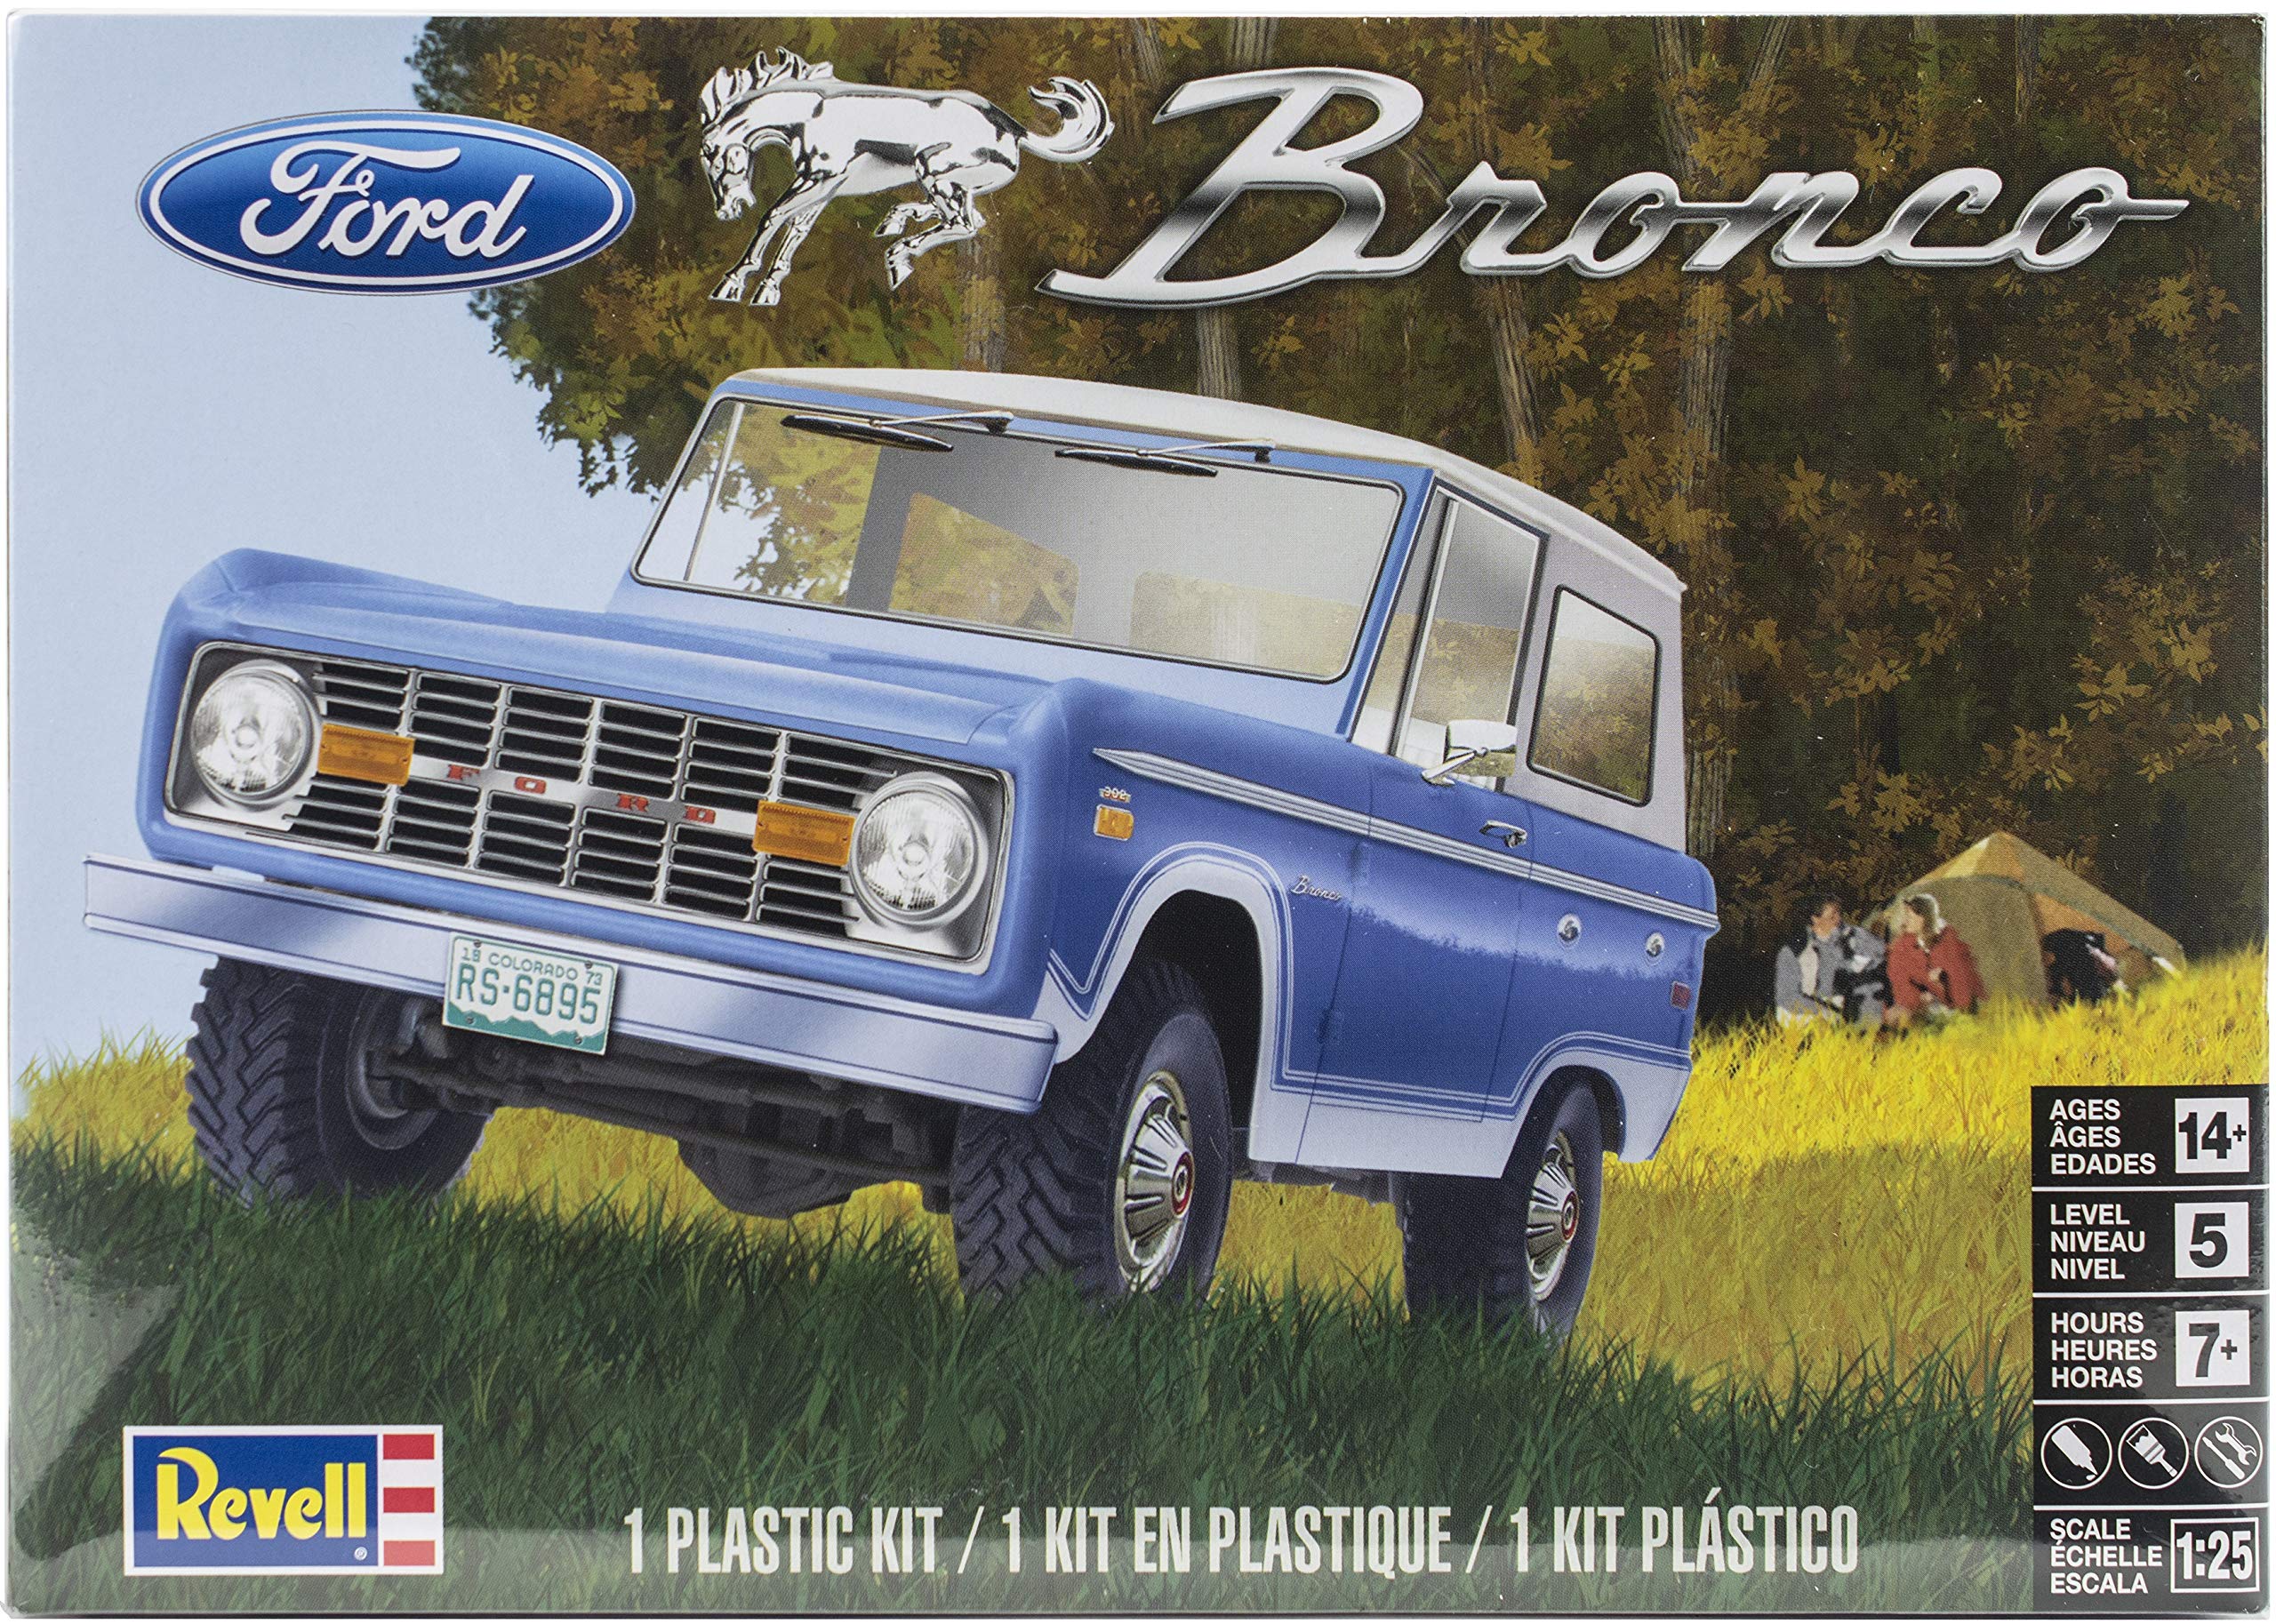 Revell USA Modellbausatz I Ford Bronco I Detailliertes Modell im Maßstab 1:25 I 137 Teile I Herausfordernder Bausatz für fortgeschrittene Modellbauer ab 14 Jahren I detaillierter Motor